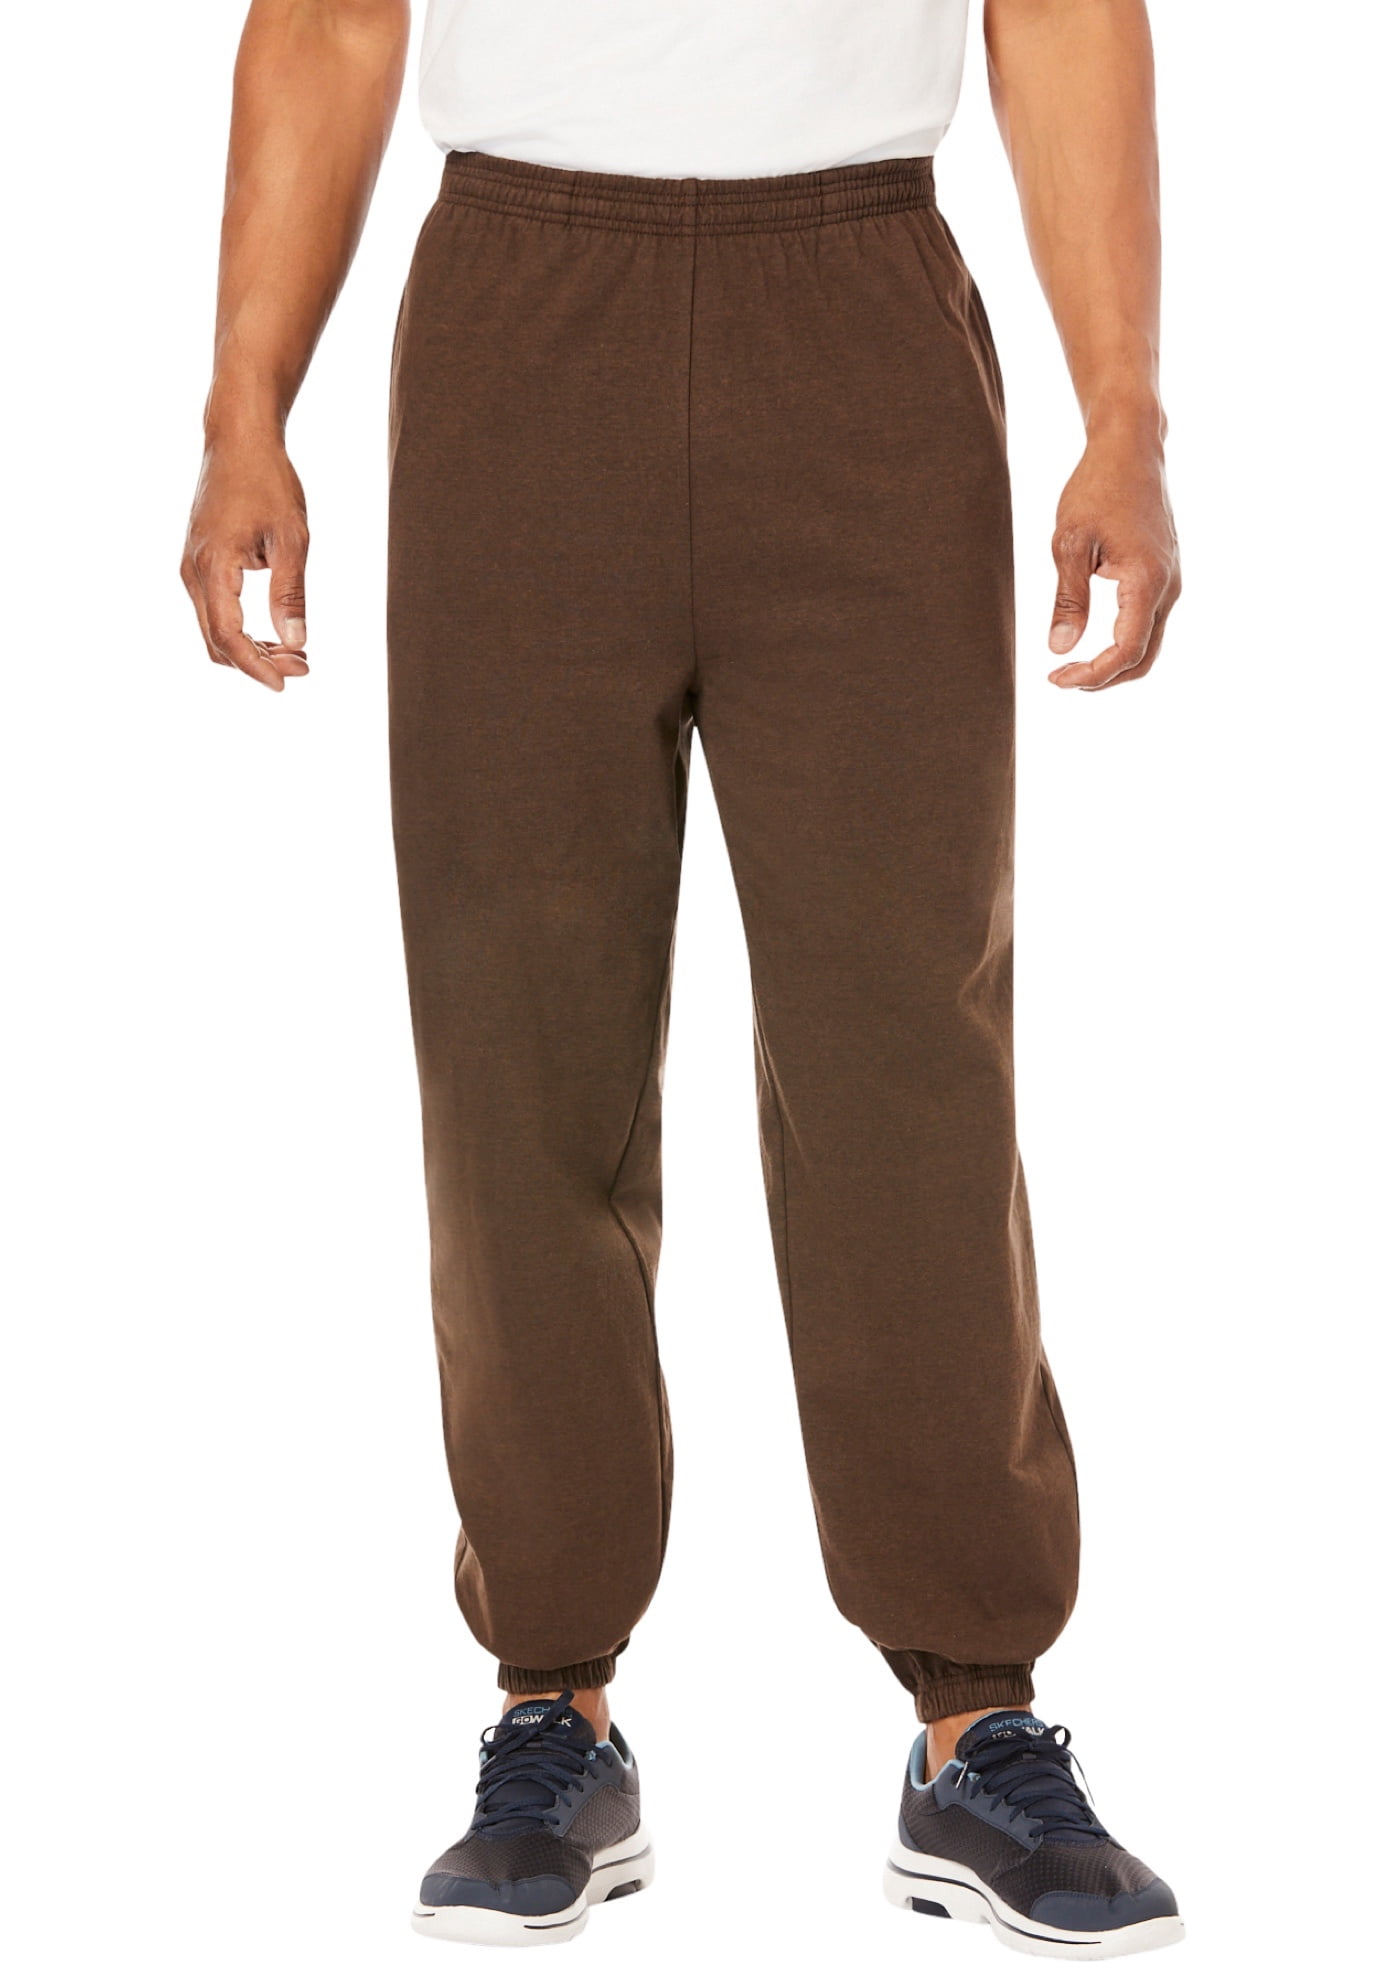 Kingsize Men's Big & Tall Lightweight Elastic Cuff Sweatpants - Walmart.com